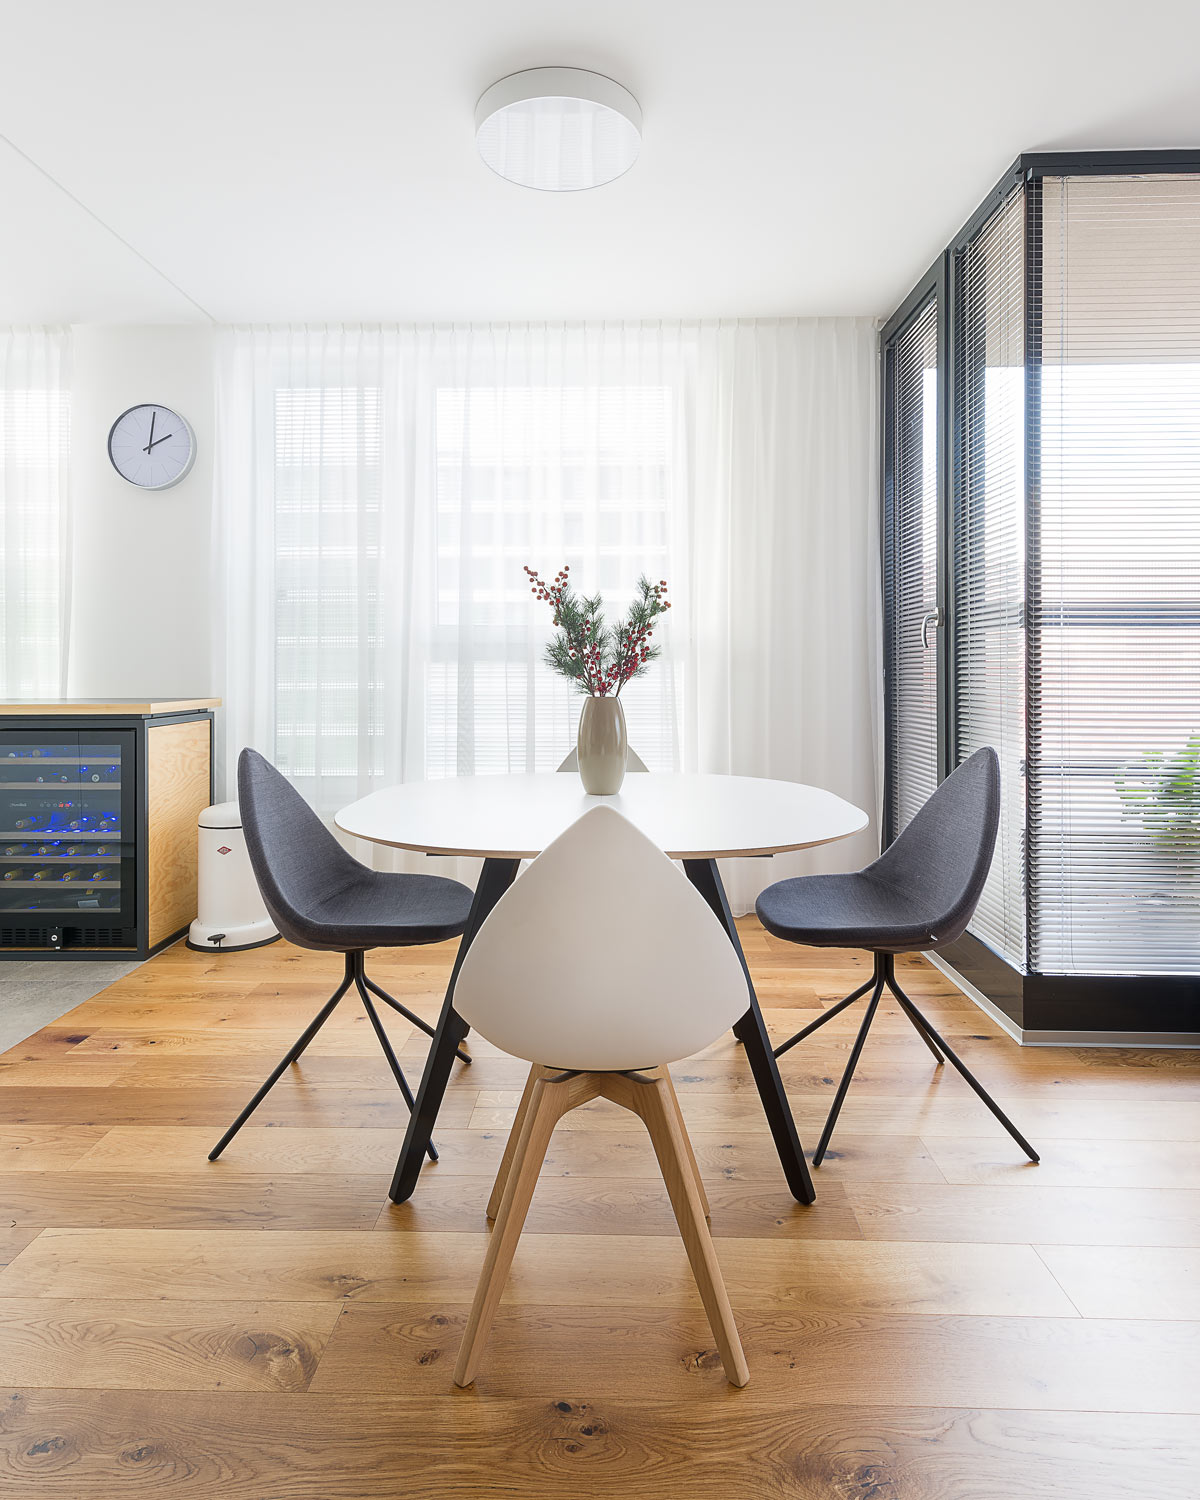 Okrúhly jedálenský stôl, dizajnové stoličky BoConcept, dubová podlaha